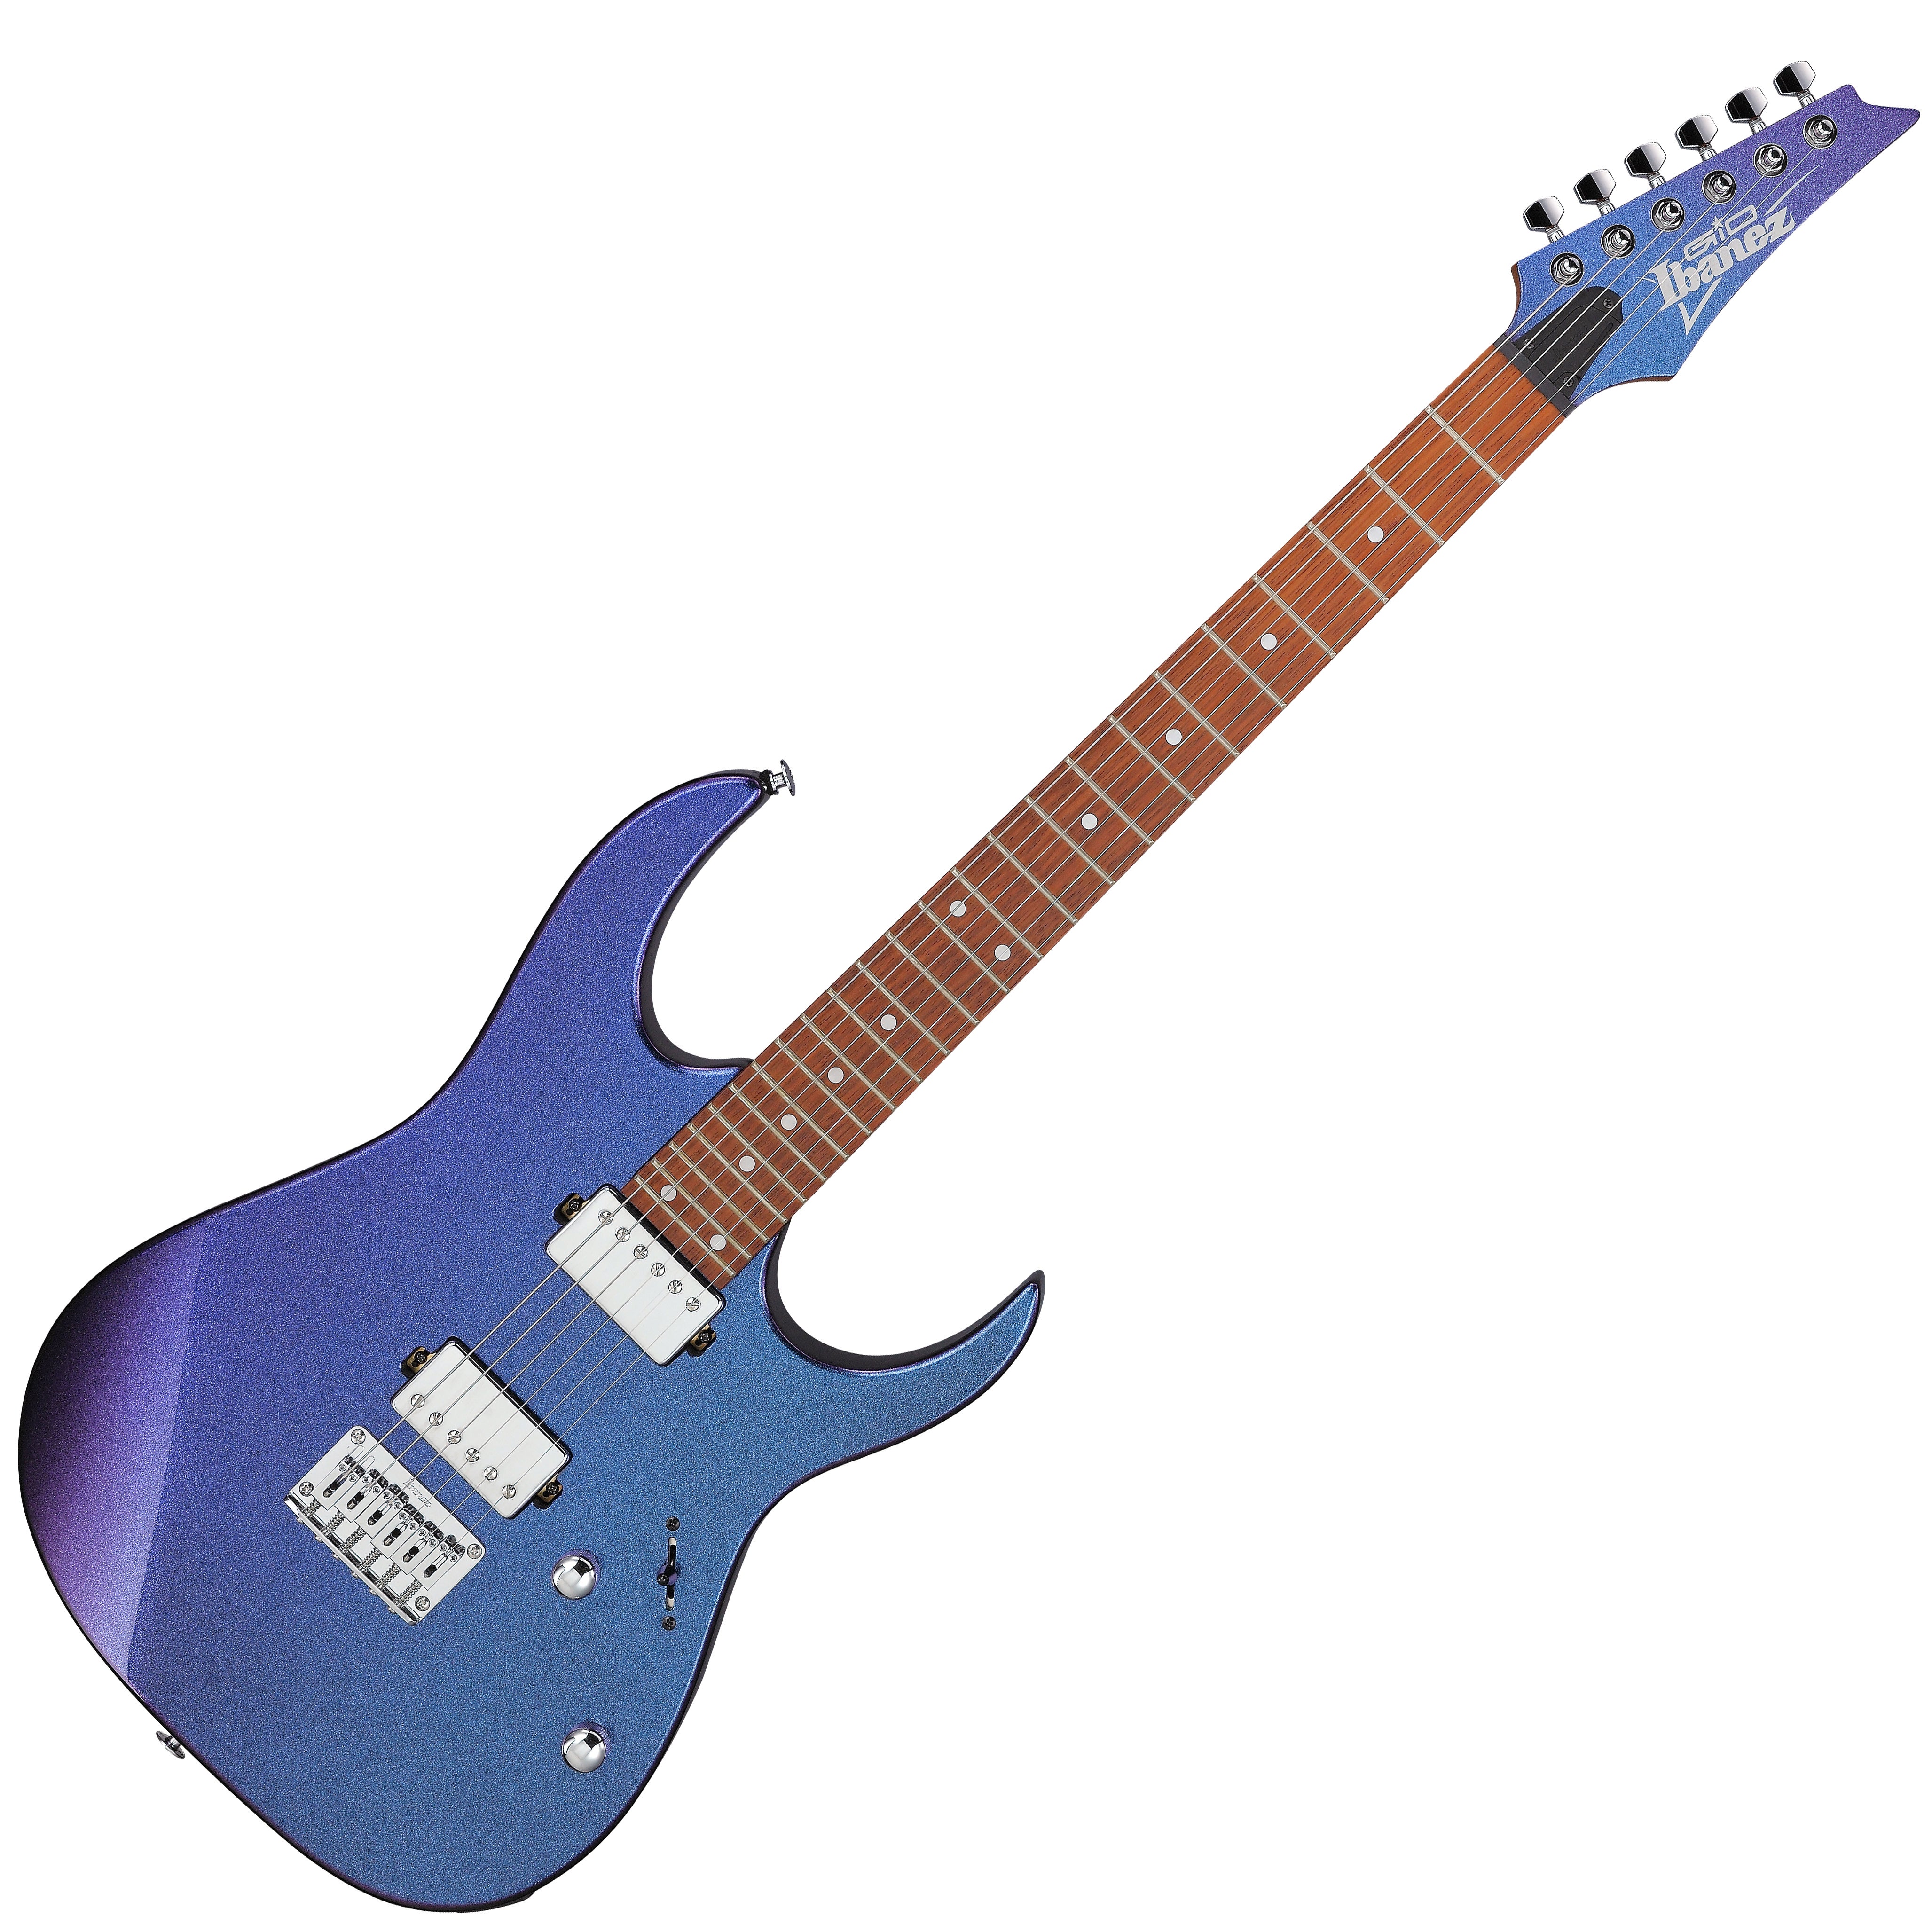 Ibanez Gio Grg121sp Electric Guitar - Blue Metal Chameleon | Music